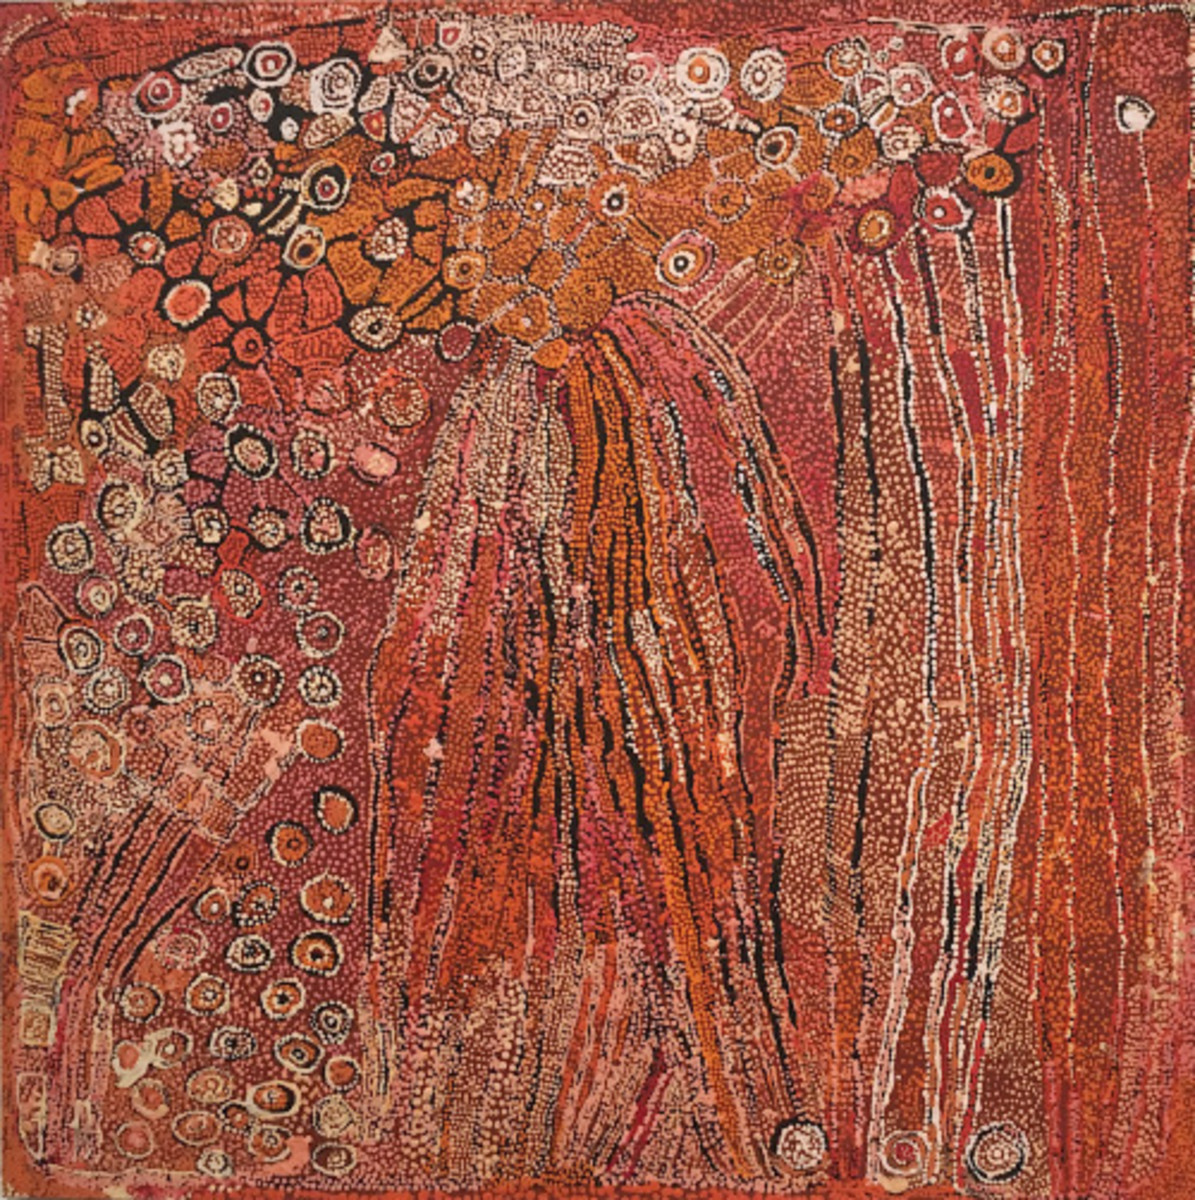 Aboriginal Art: Naata Nungurrayi